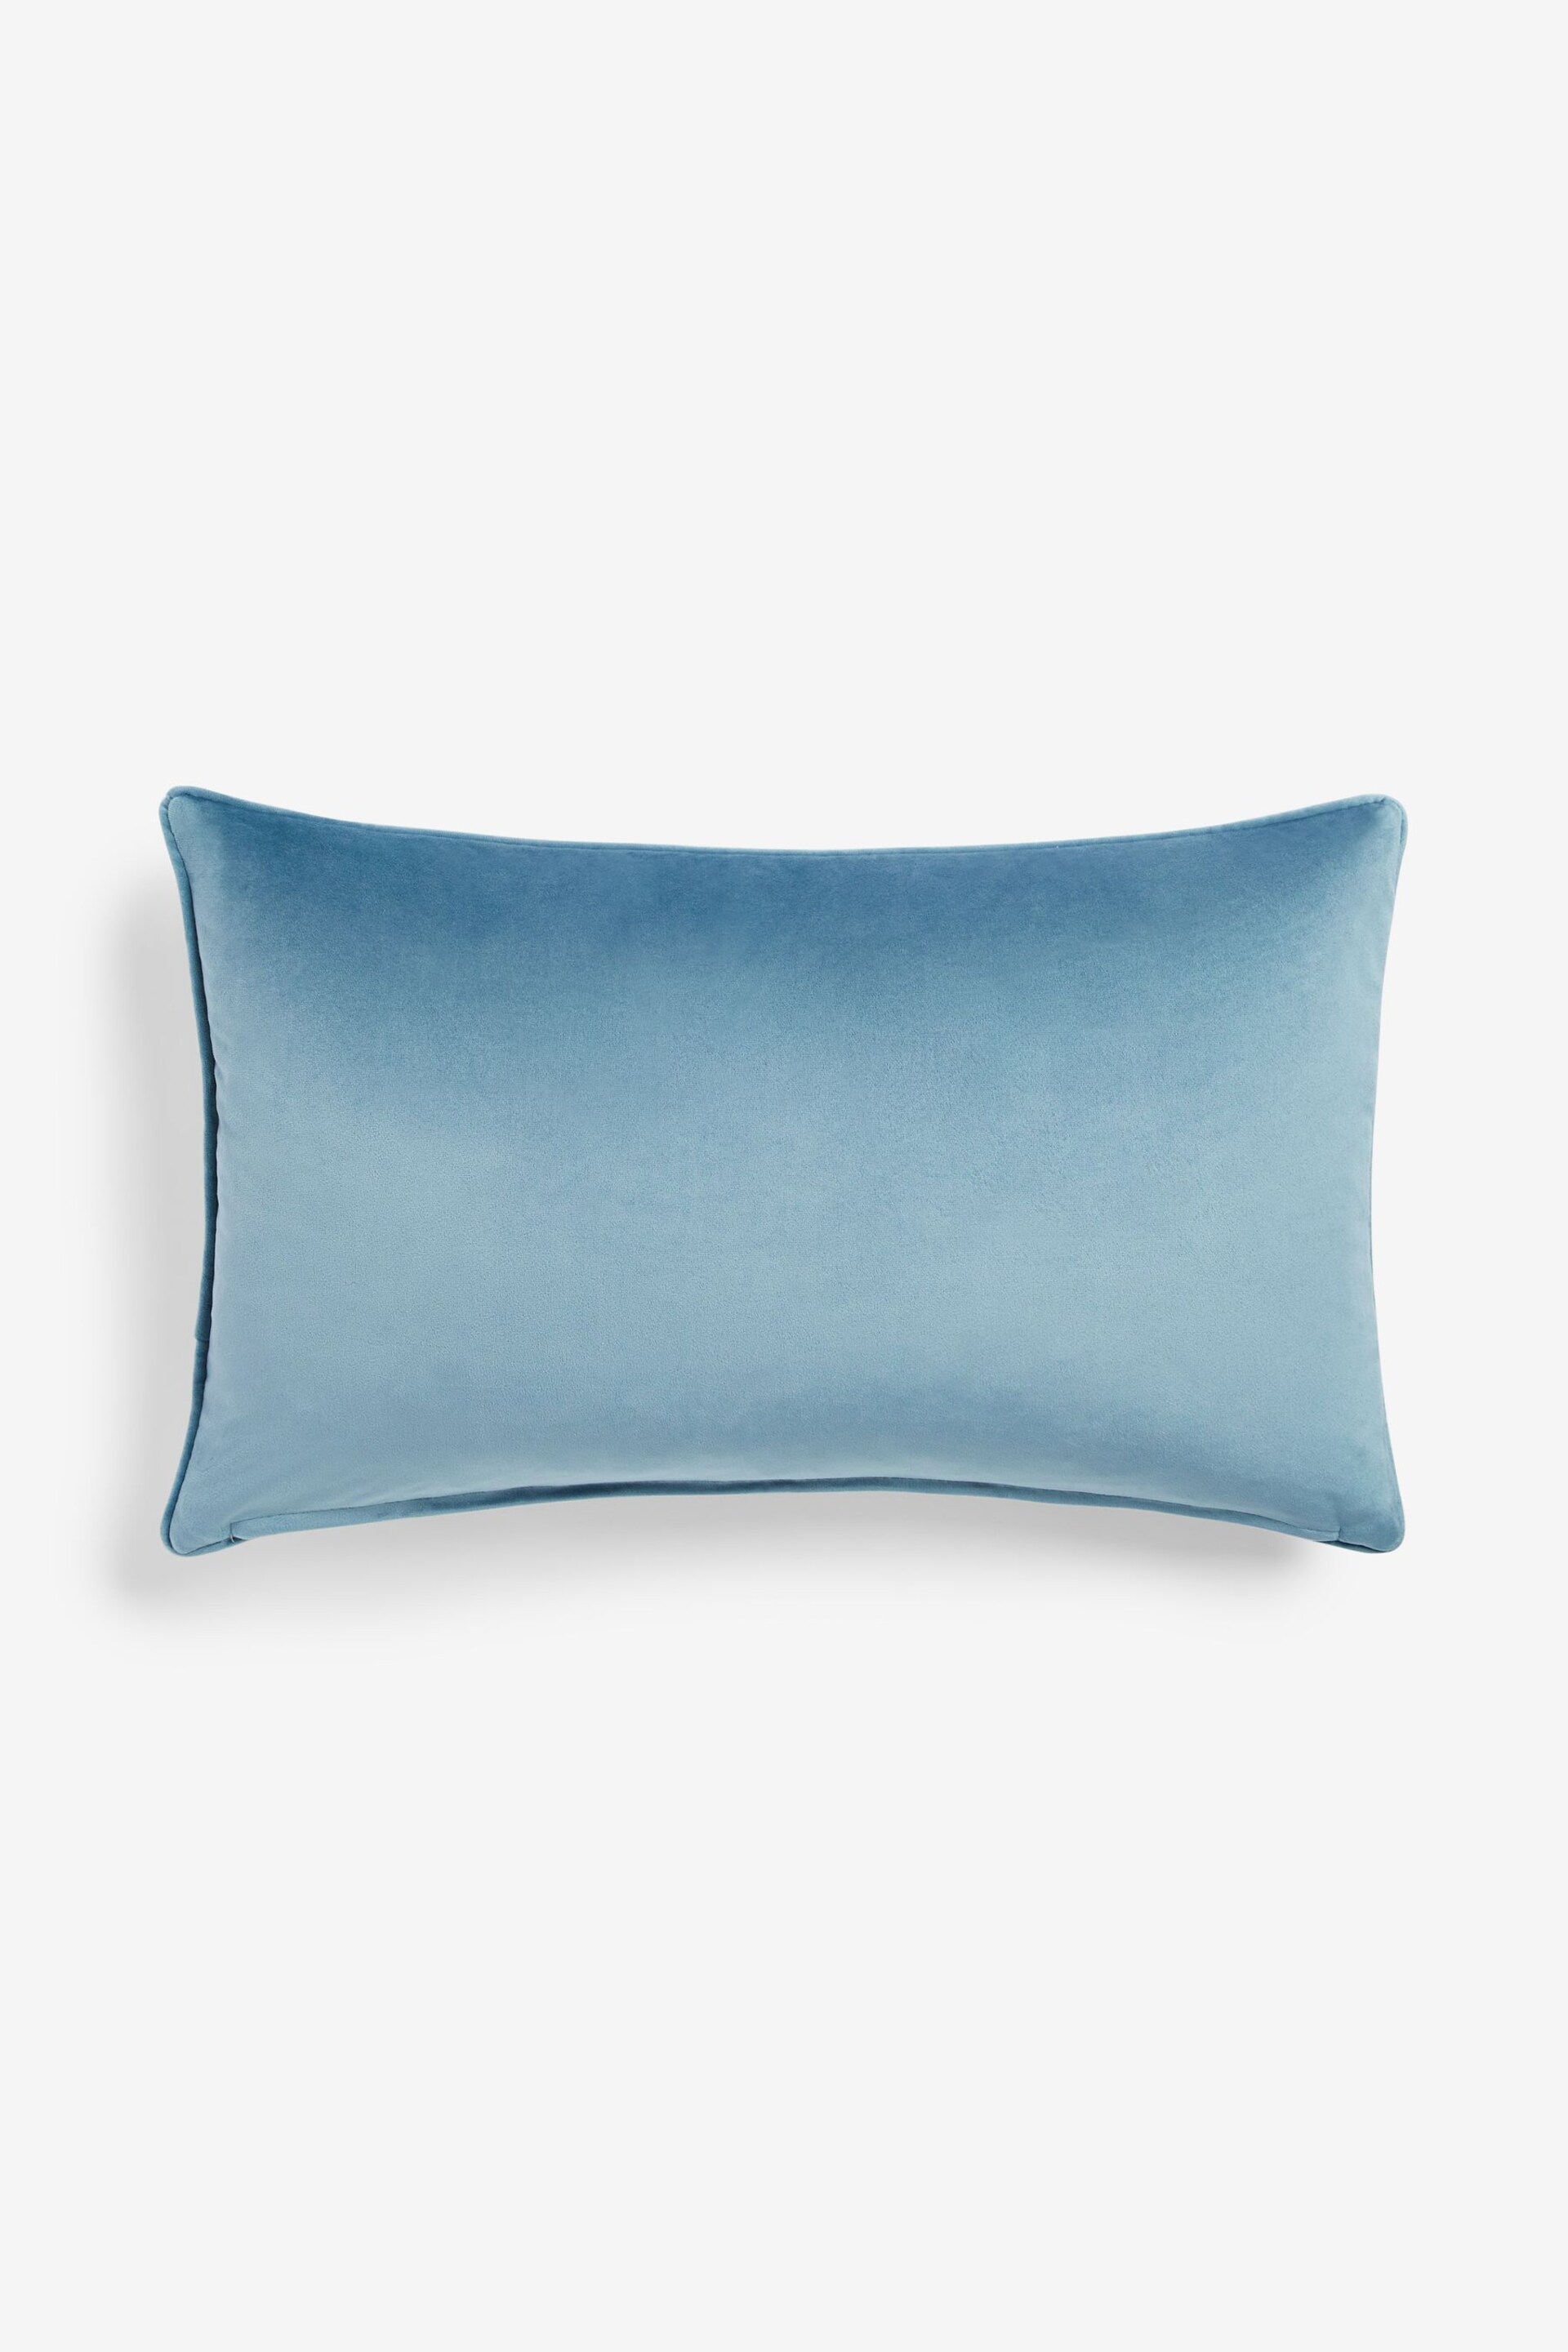 Pale Blue 40 x 59cm Matte Velvet Cushion - Image 3 of 5